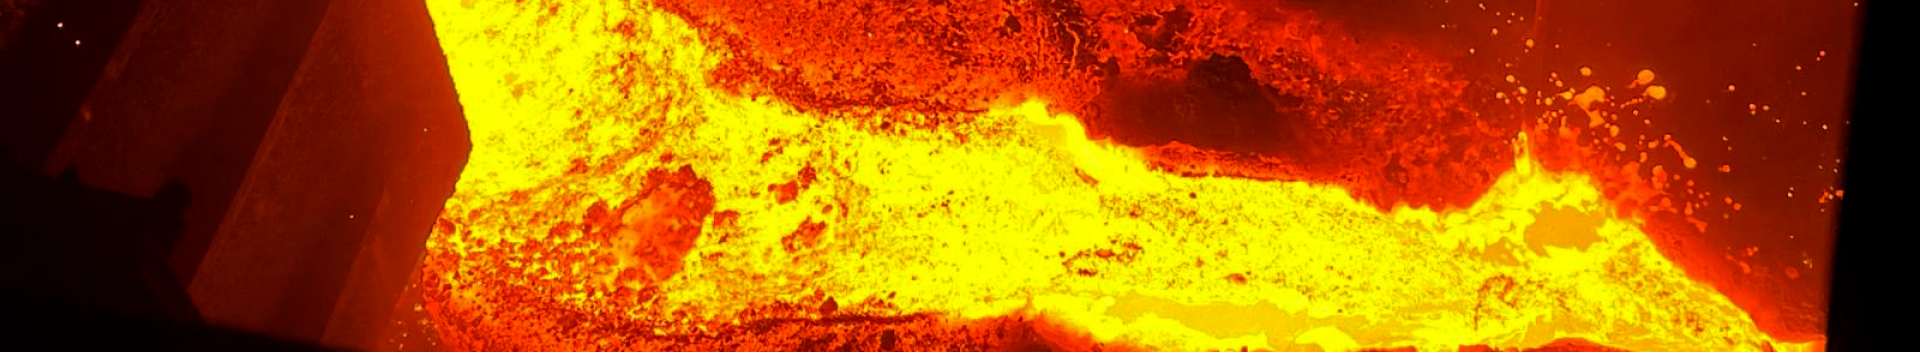 Molten iron form Blast Furnace 5